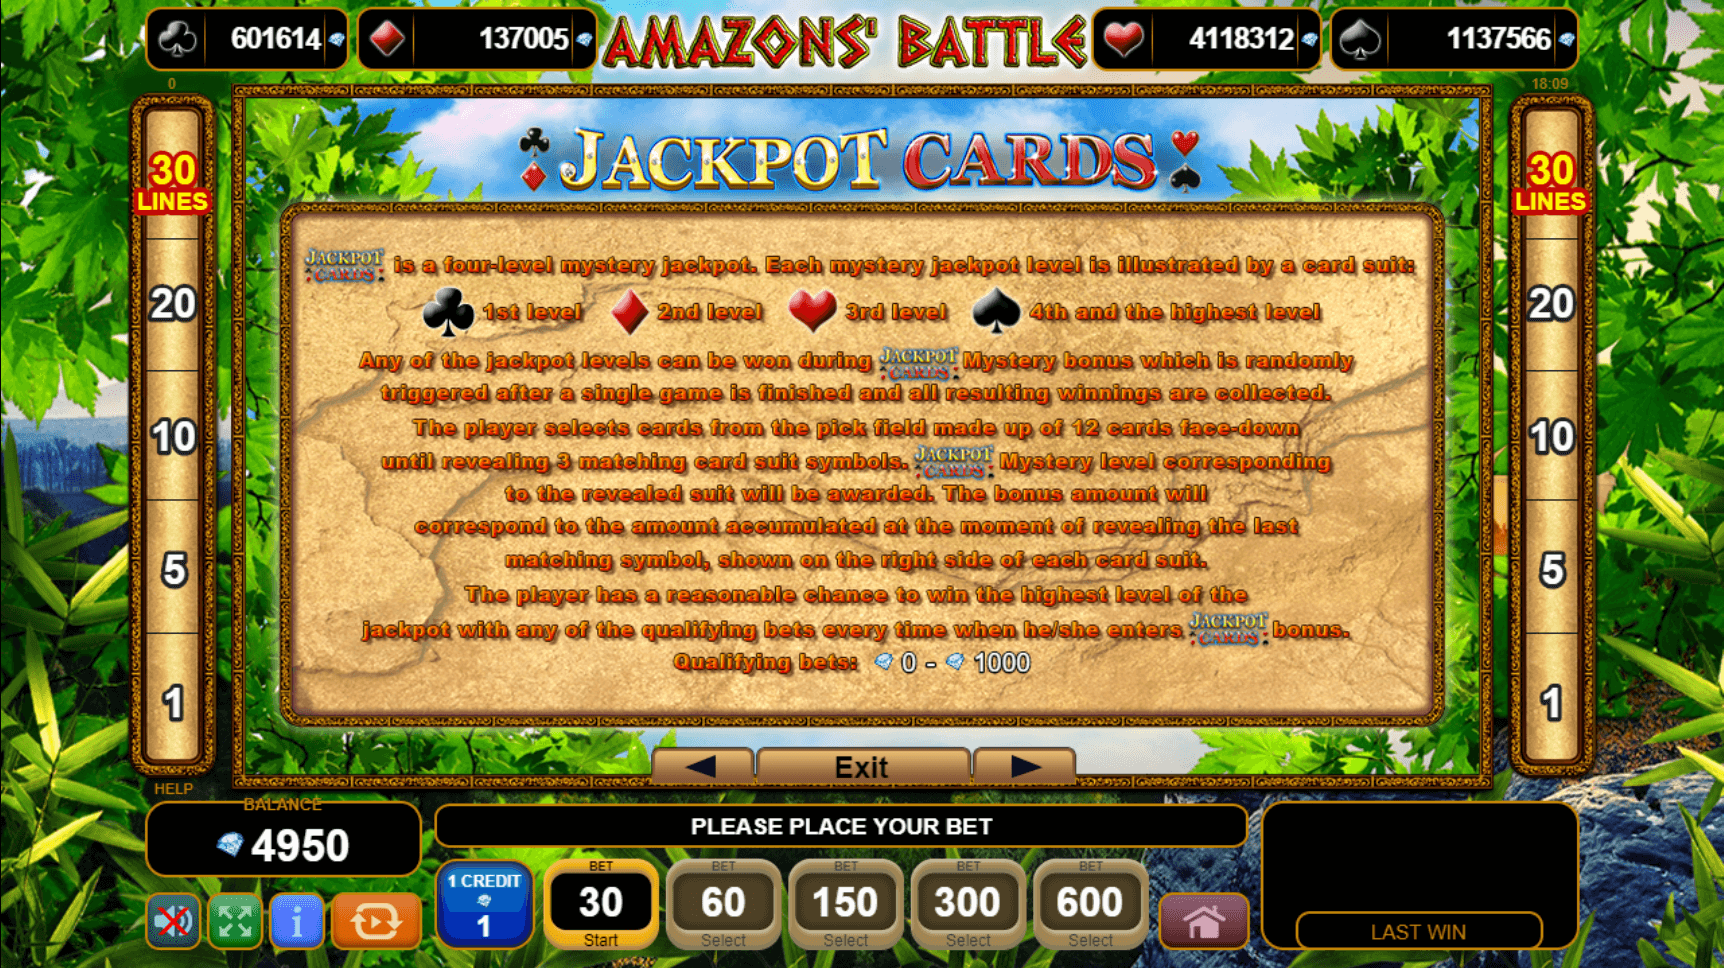 50 amazons battle slot machine detail image 4